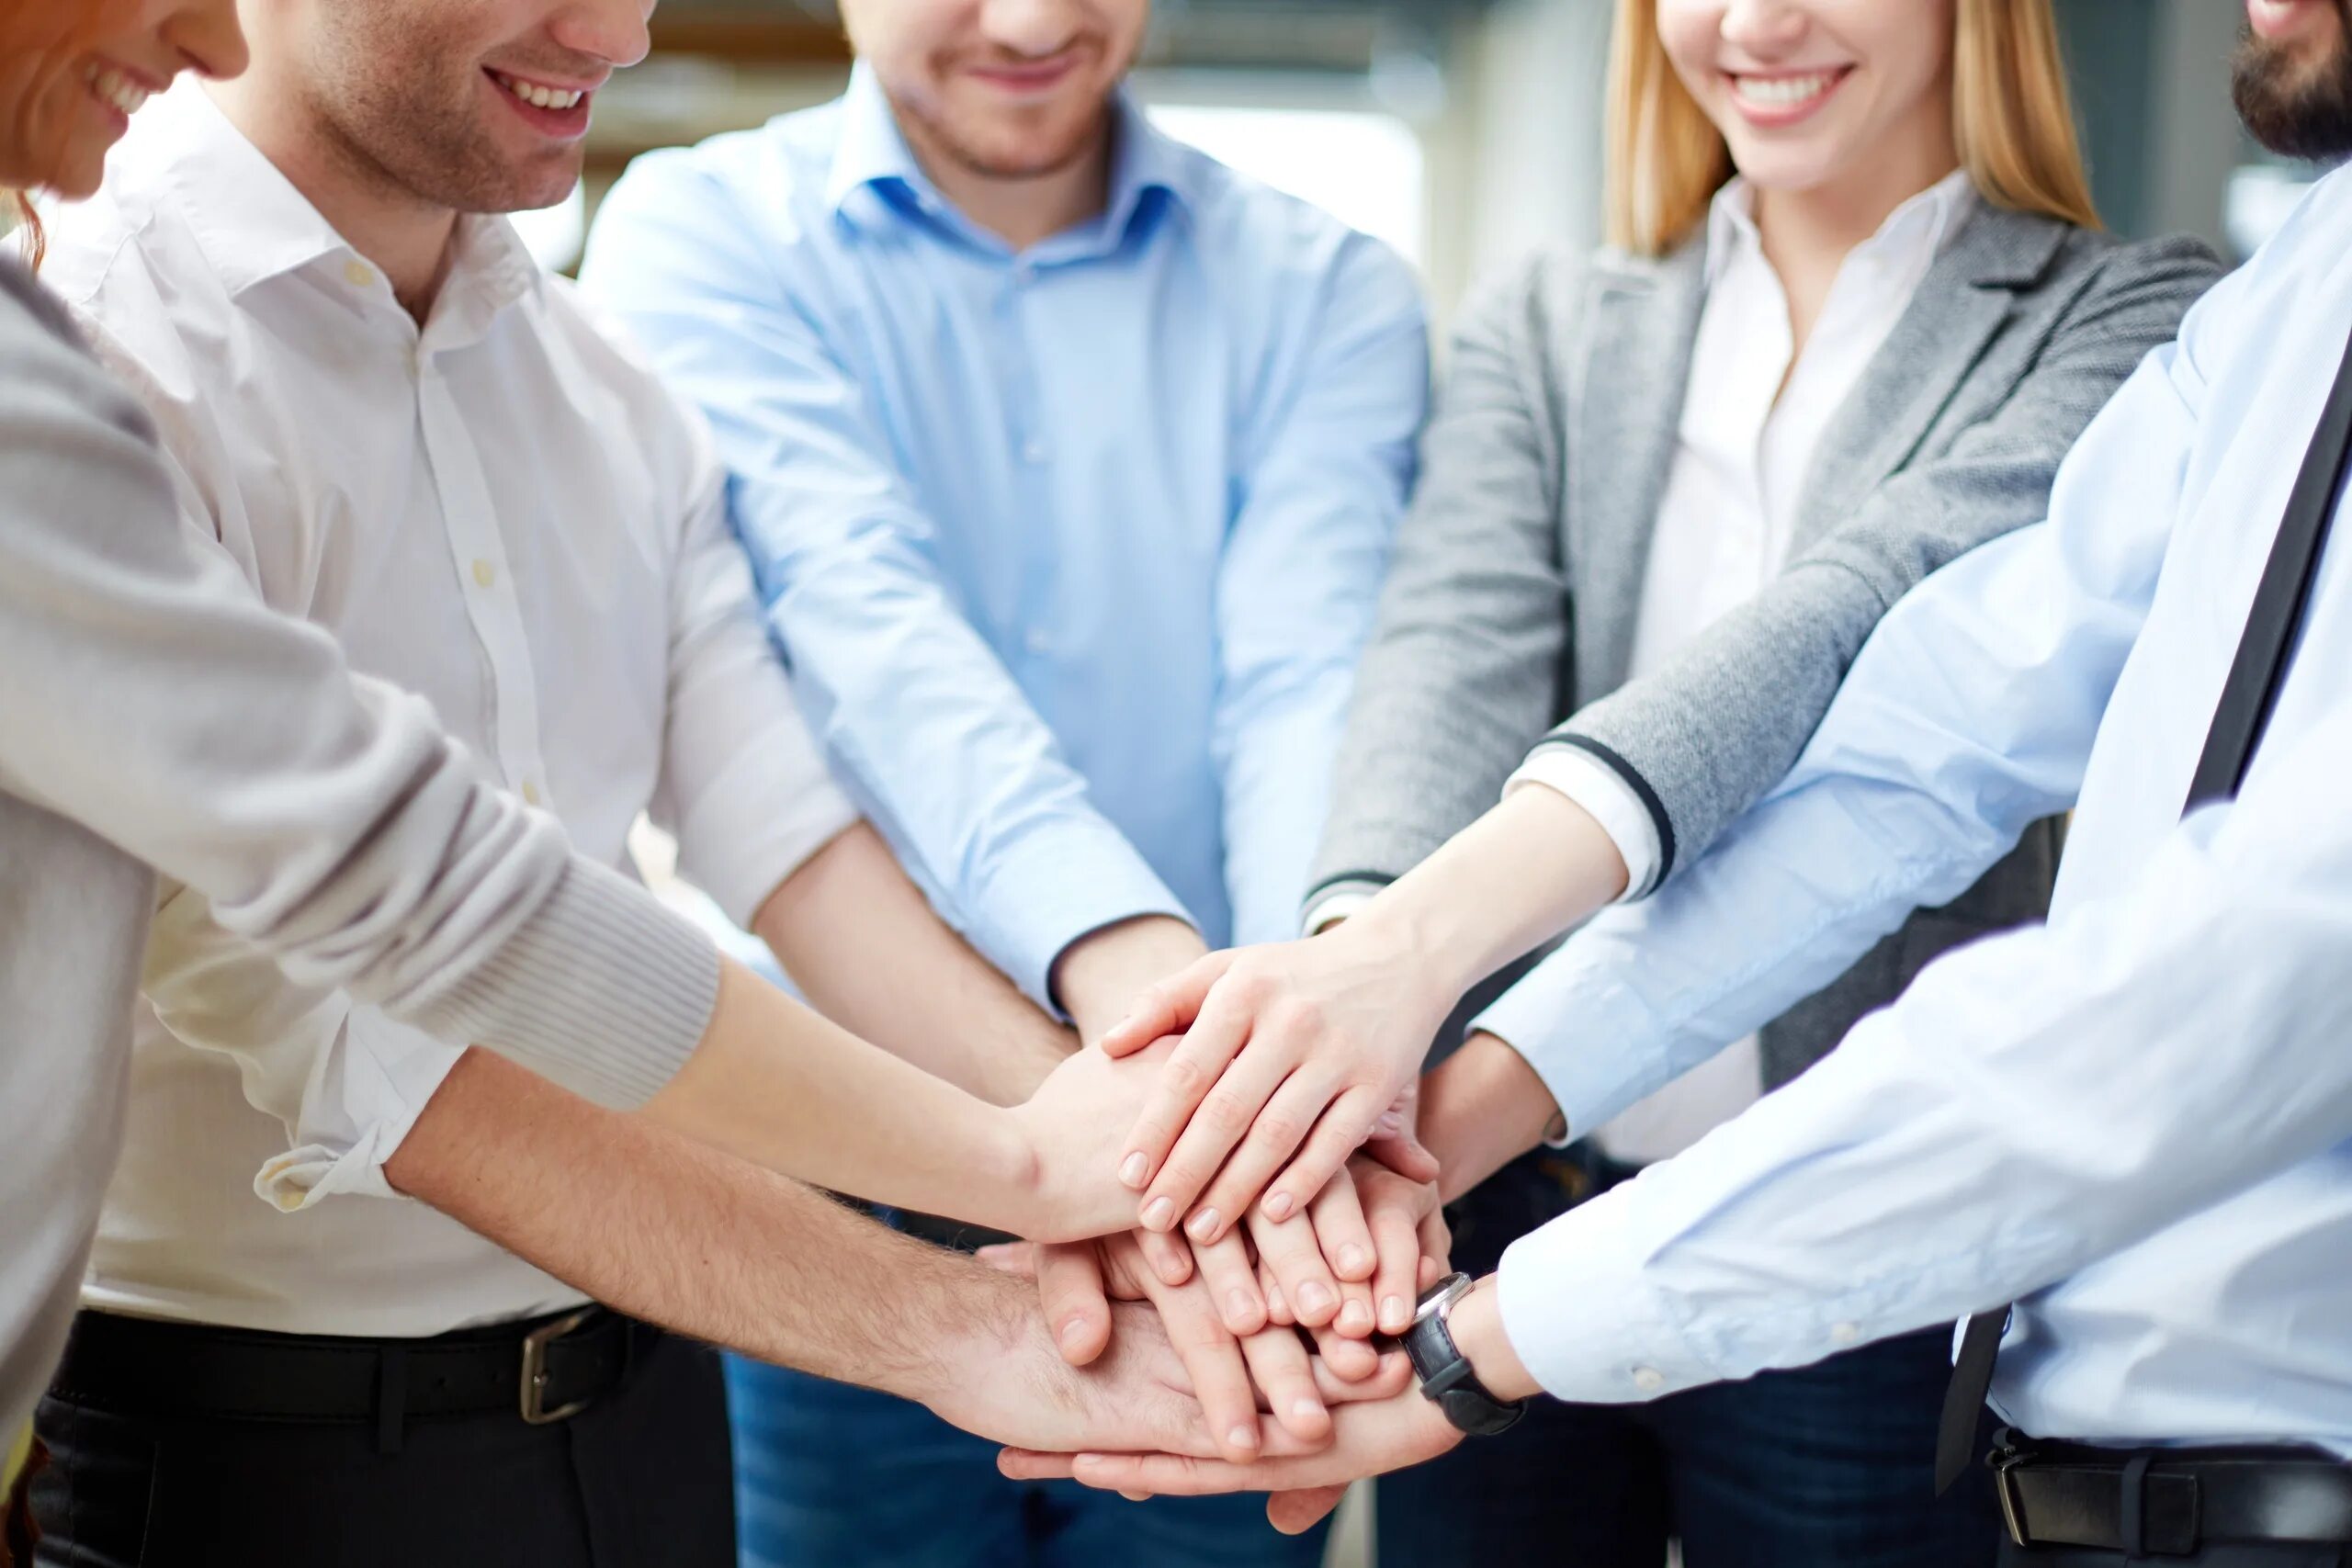 Client handshake. Бизнес команда. Рукопожатие партнеров. Команда руки. Рукопожатие коллег.